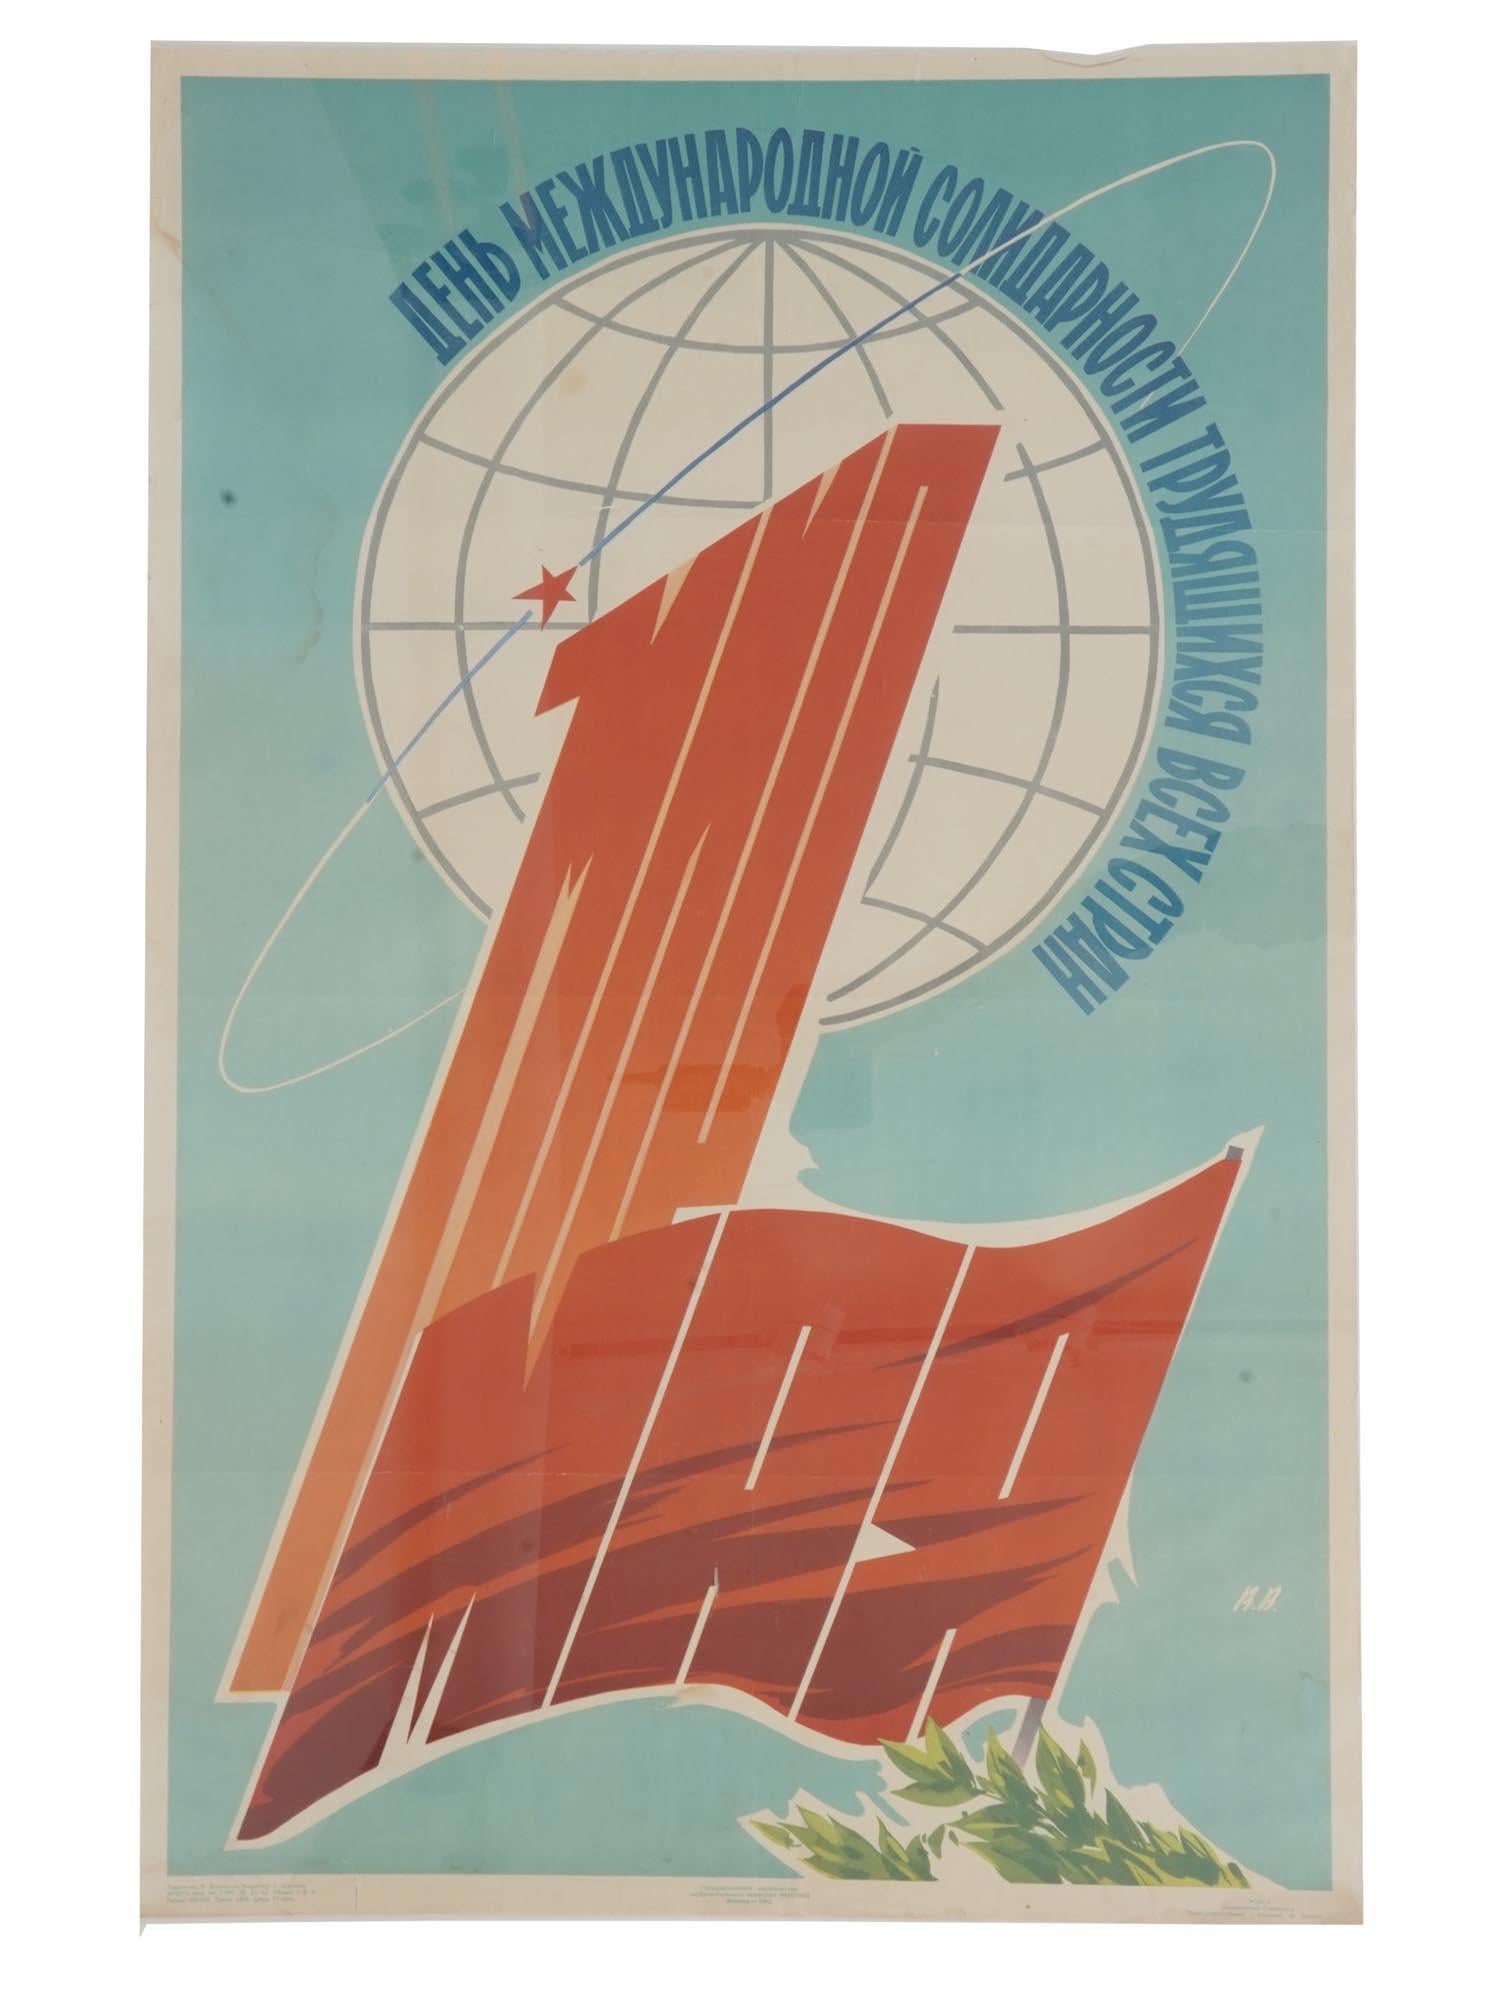 Description
A Soviet poster 